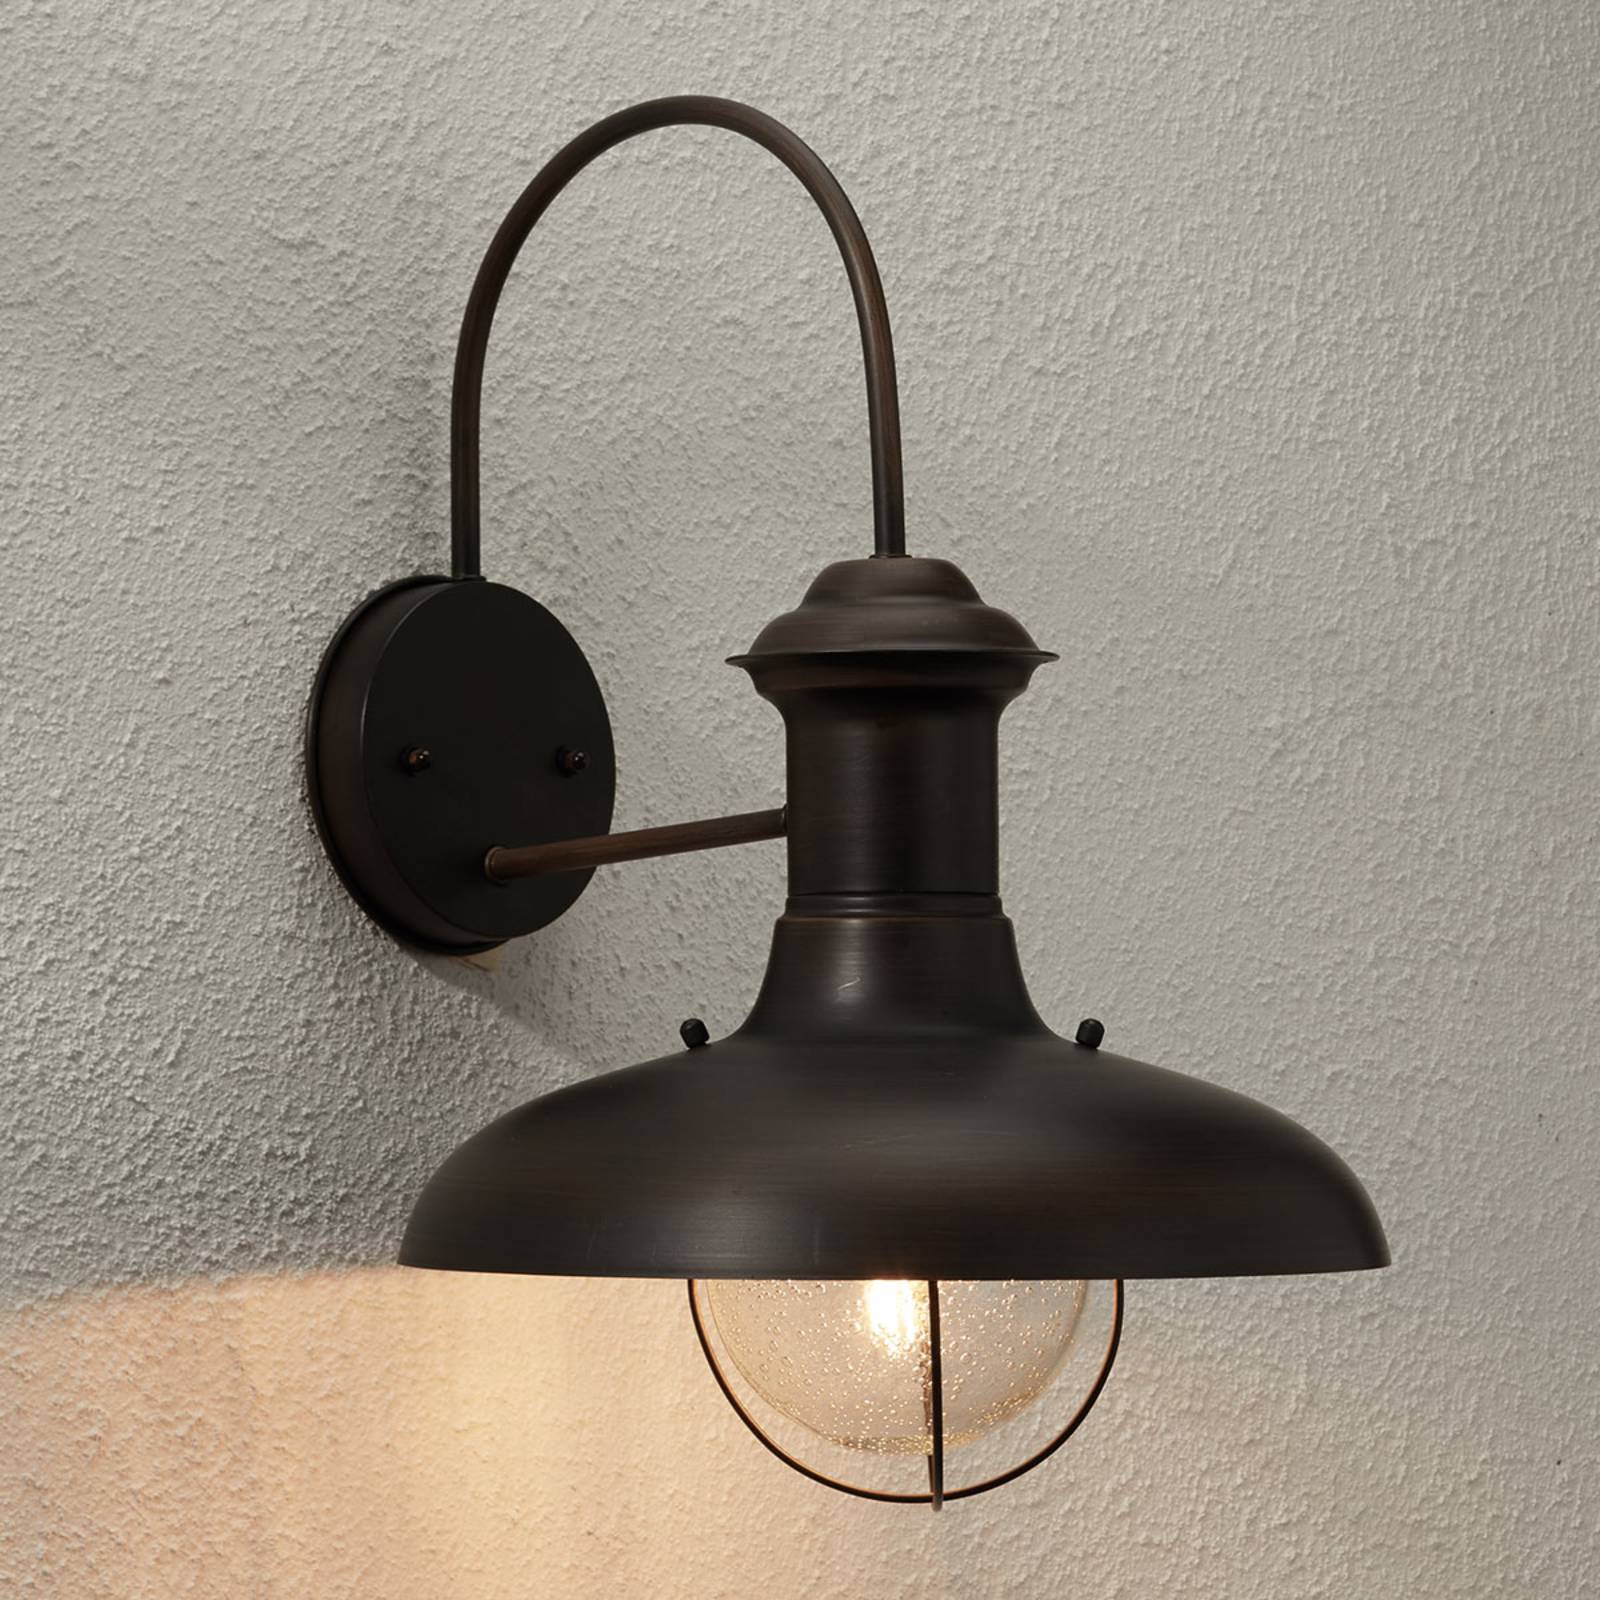 Oxide bruine outdoor wandlamp ESTORIL-G